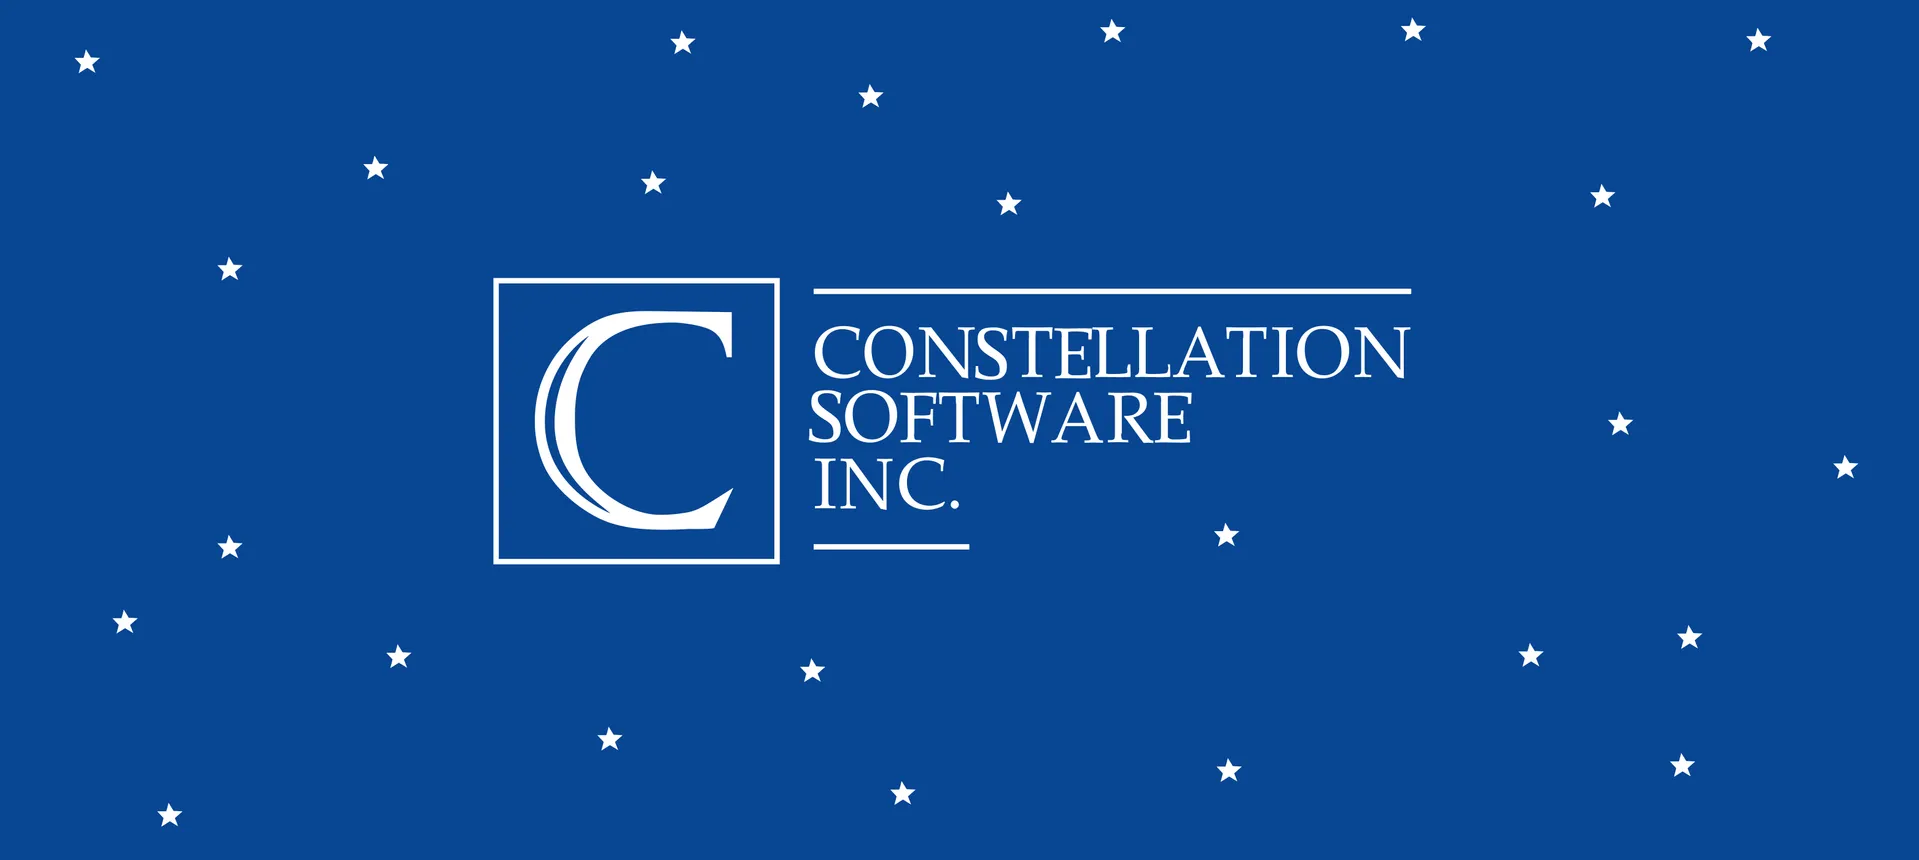 constellation software company presentation